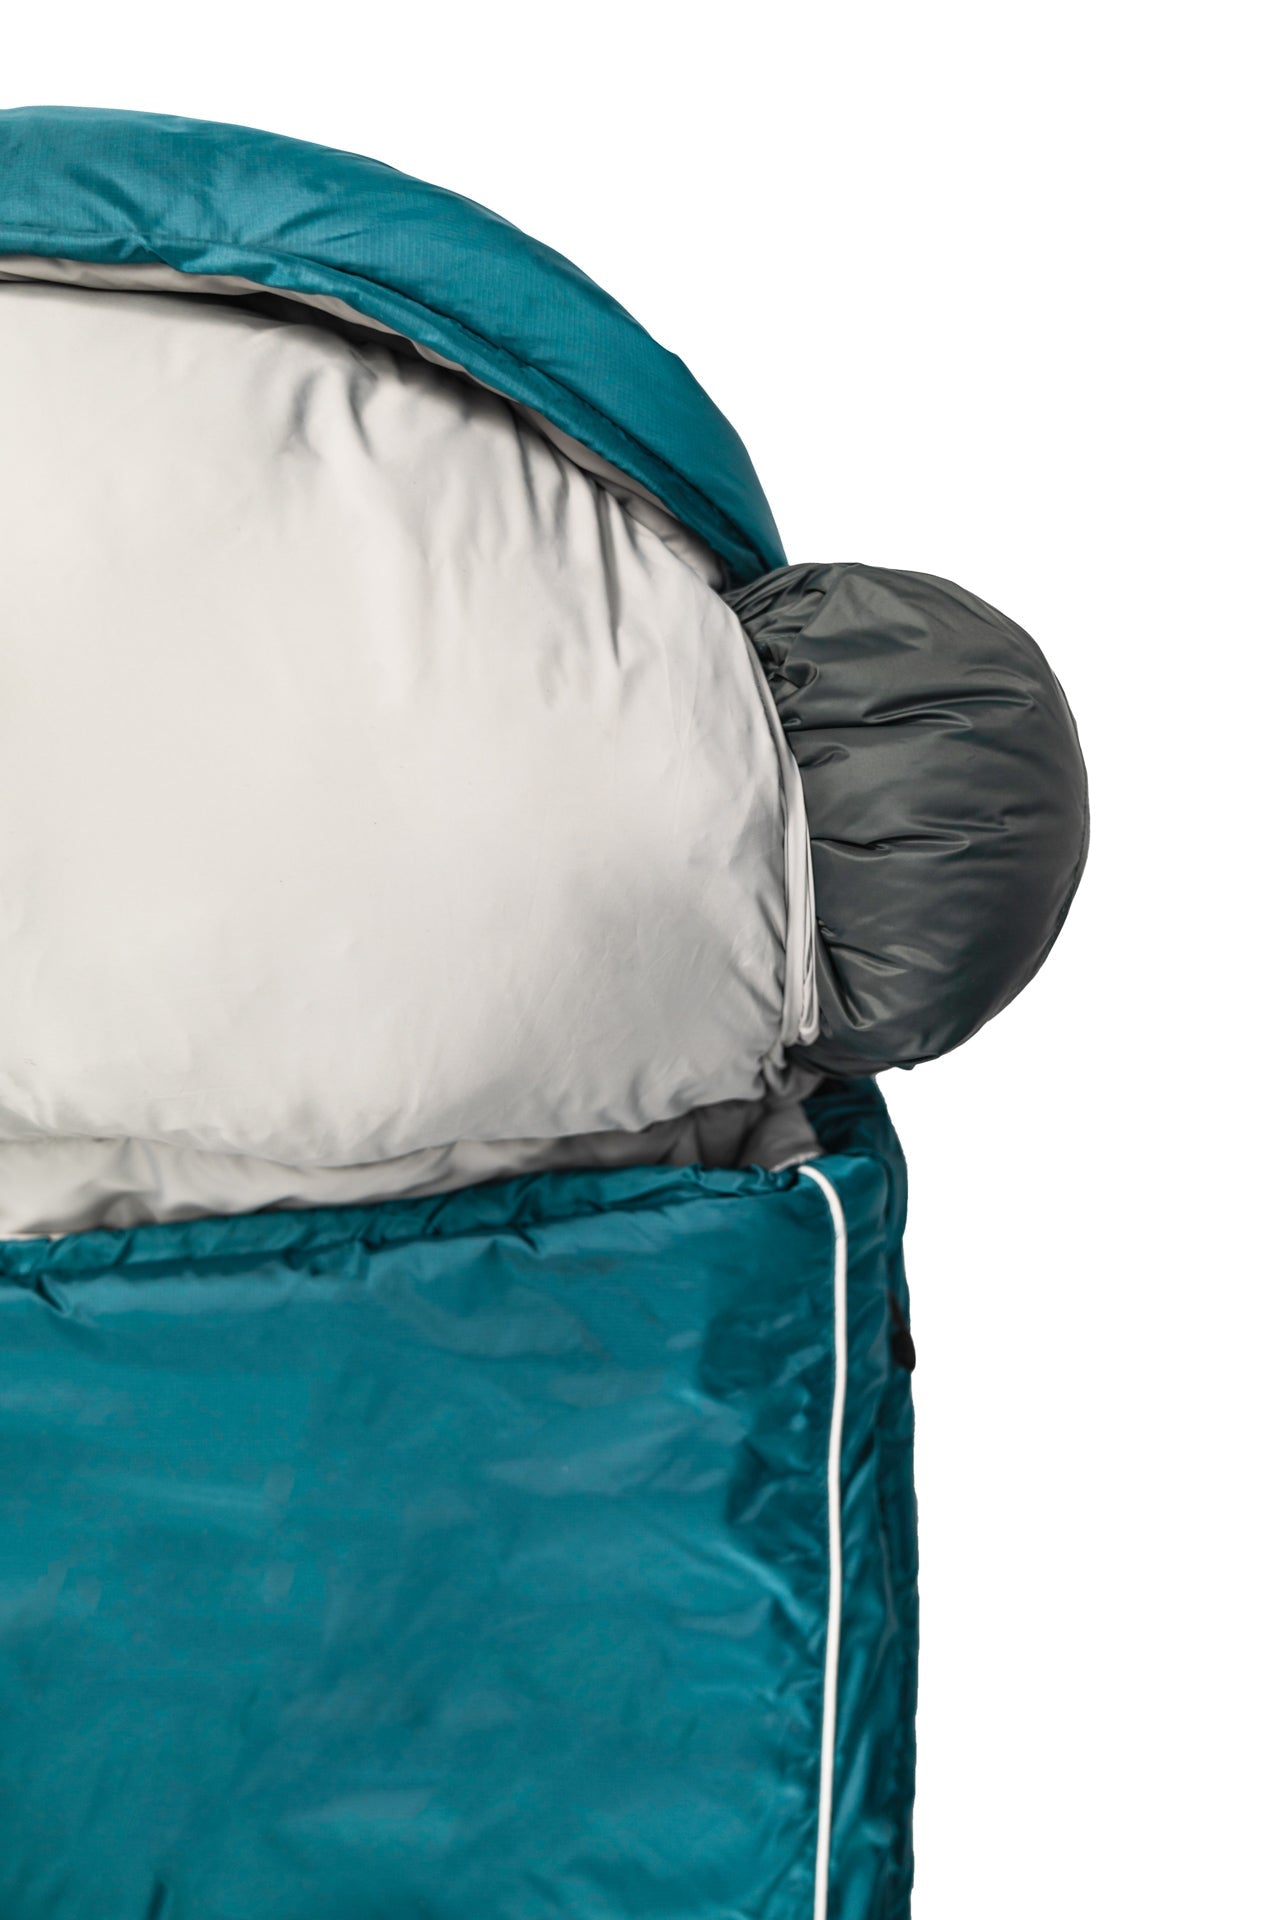 Grüezi bag Komfortschlafsack Biopod Wolle Goas Comfort - Kopfkisseneinschubfach